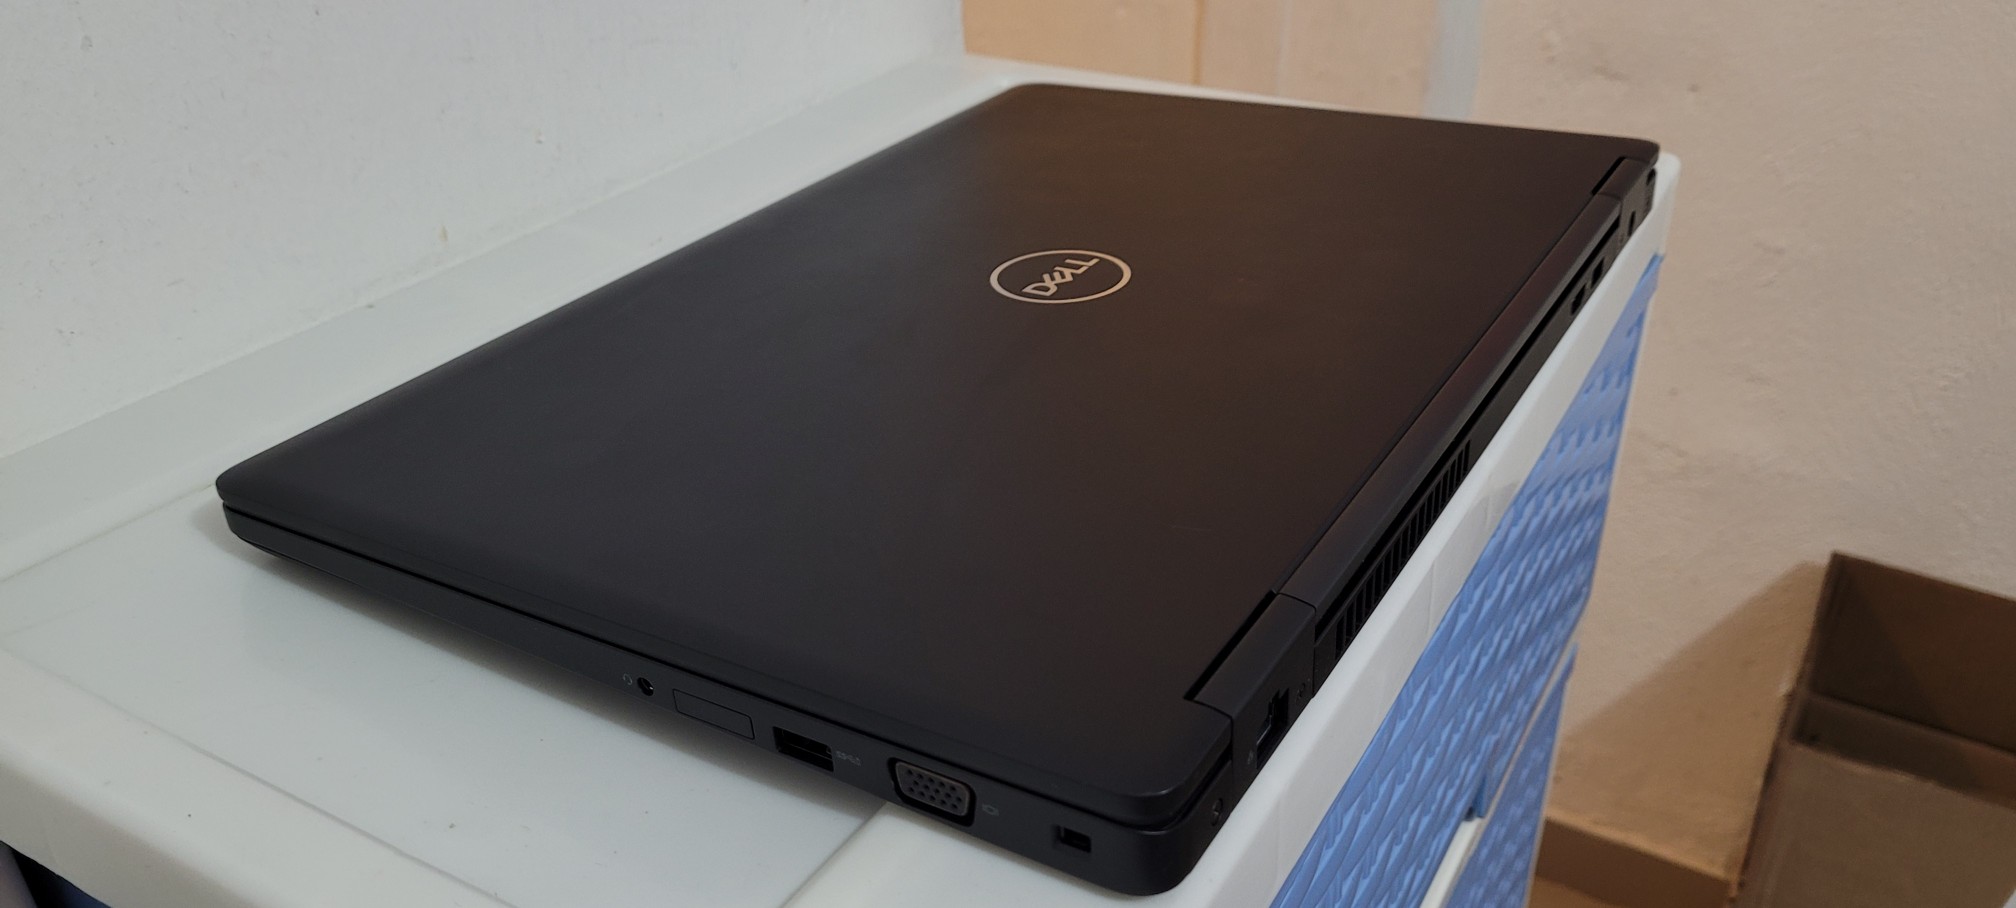 computadoras y laptops - Laptop Dell 5570 17 Pulg Core i7 Ram 16gb ddr4 intel 8gb Y Aty Radeon R7 2gb 2